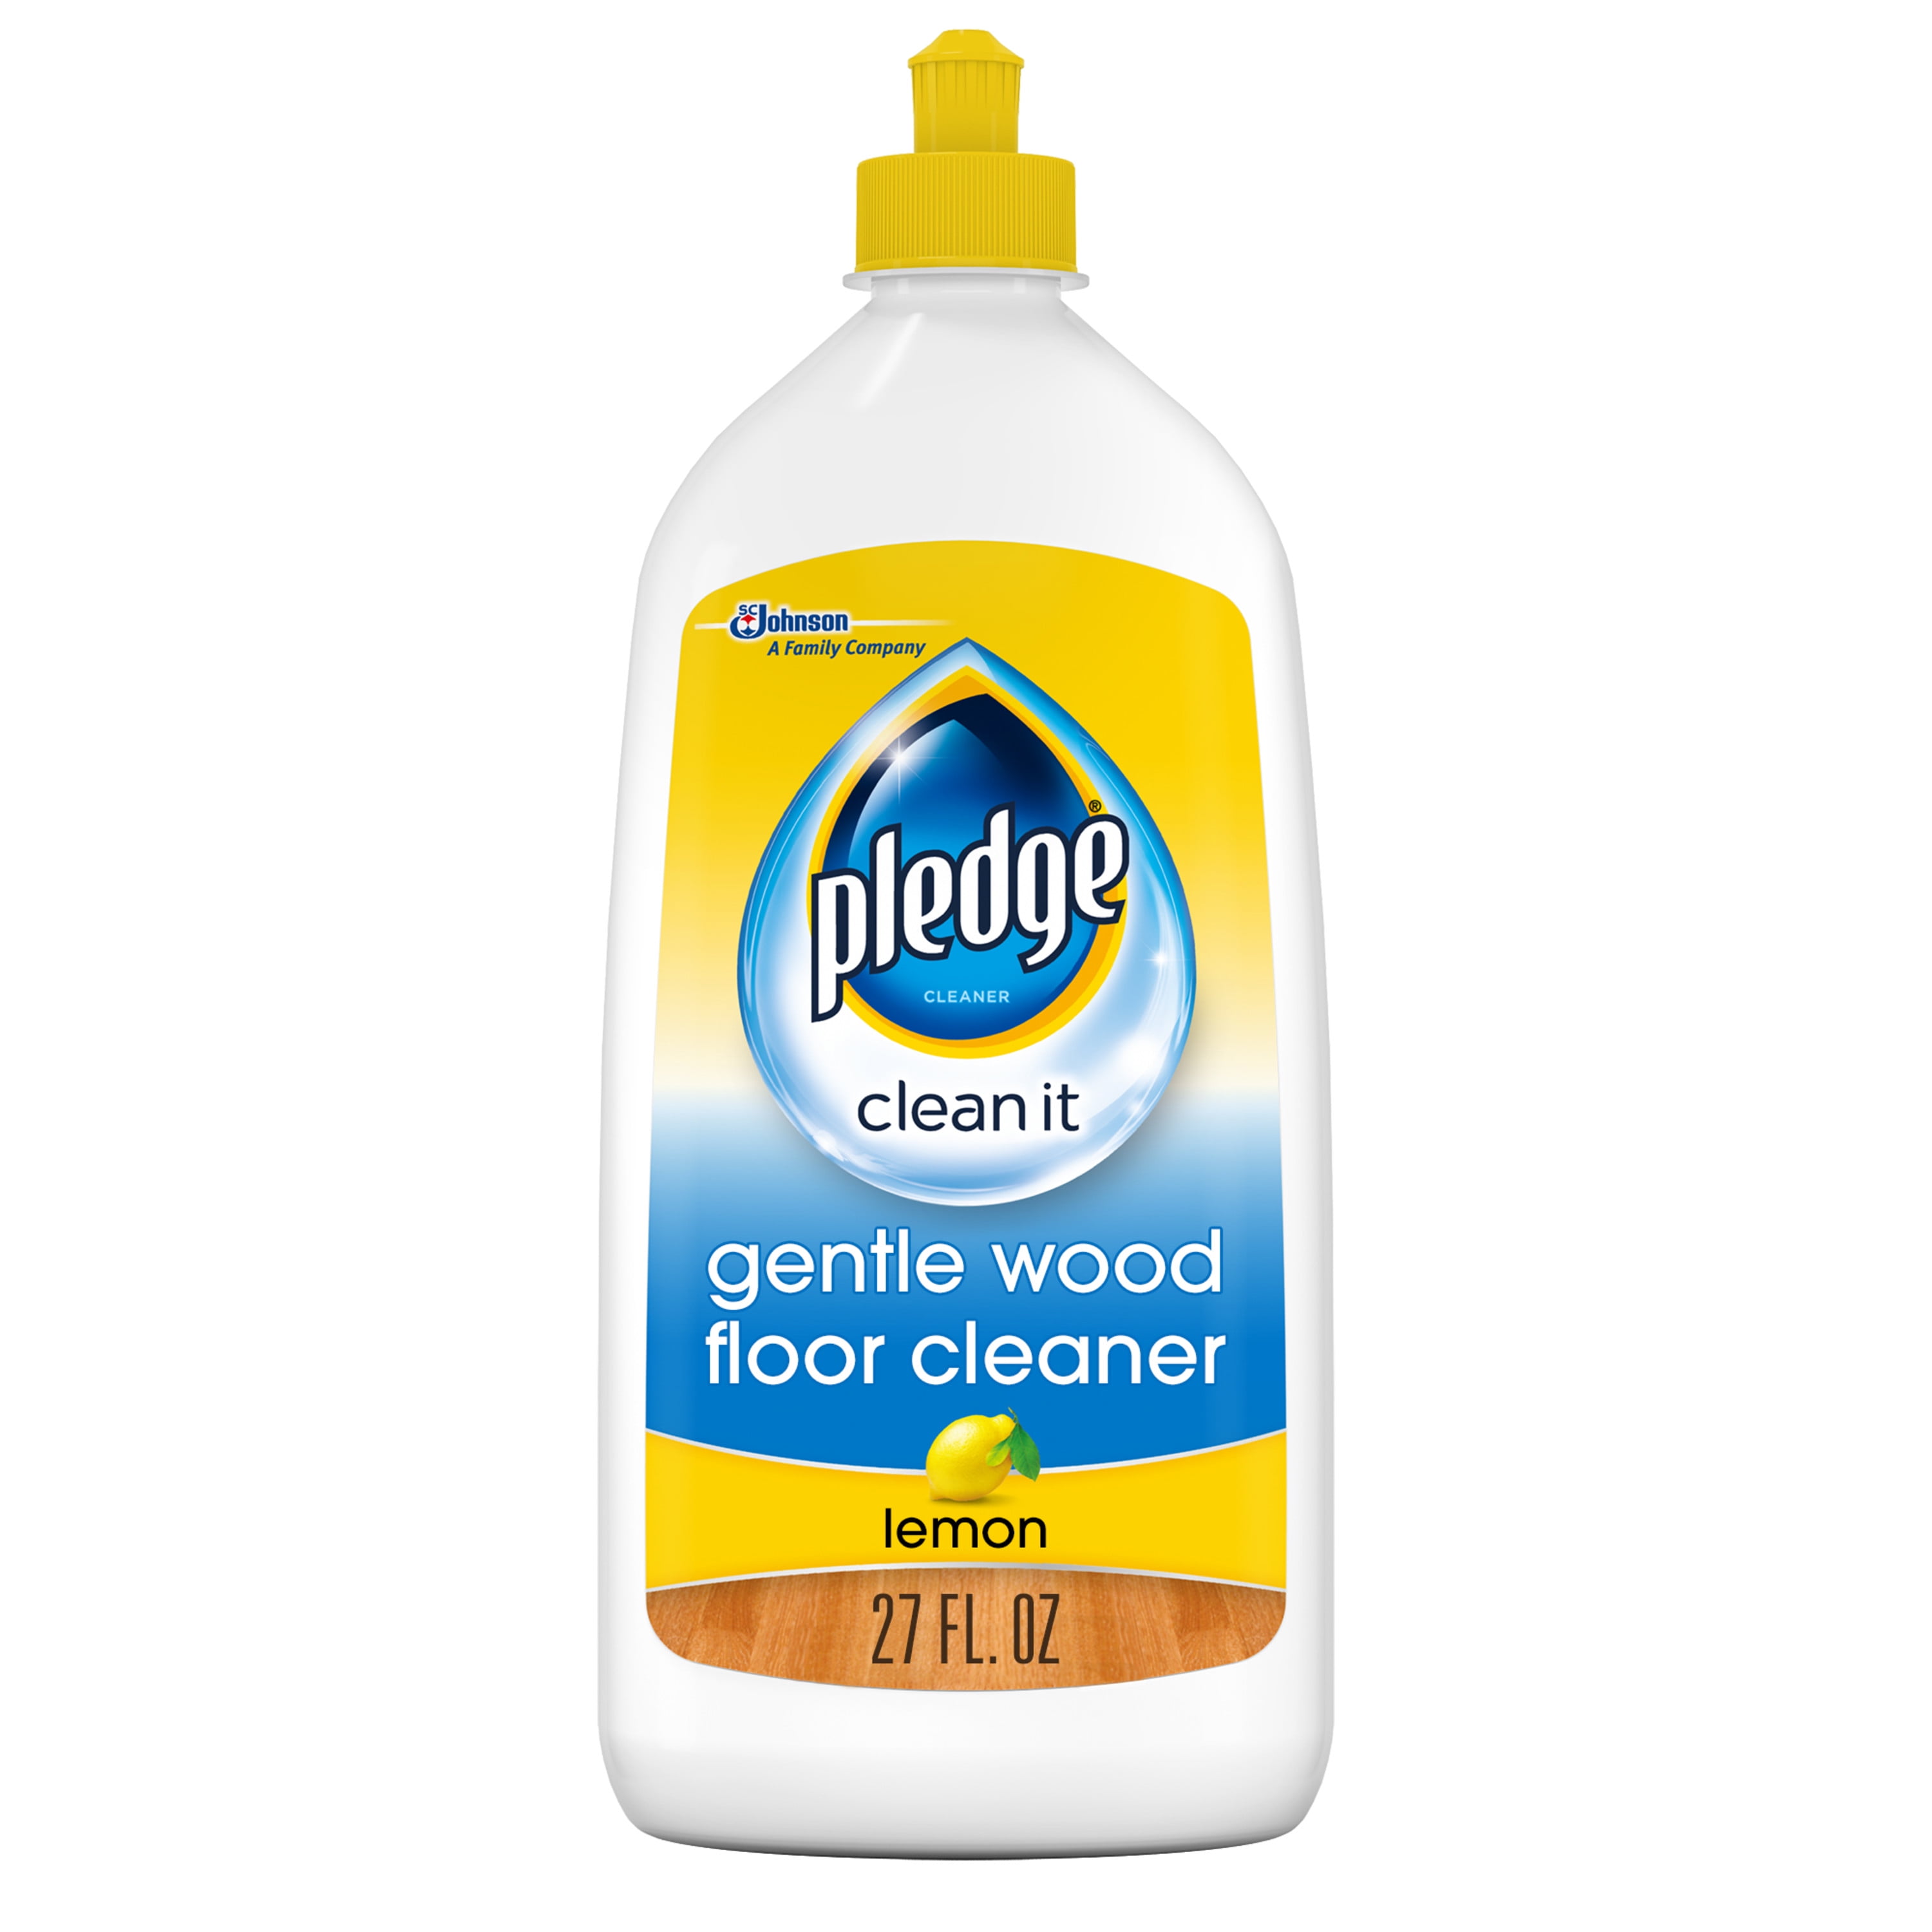 Pledge 4-in-1 Wood Floor Cleaner, Citrus - 27 fl oz bottle